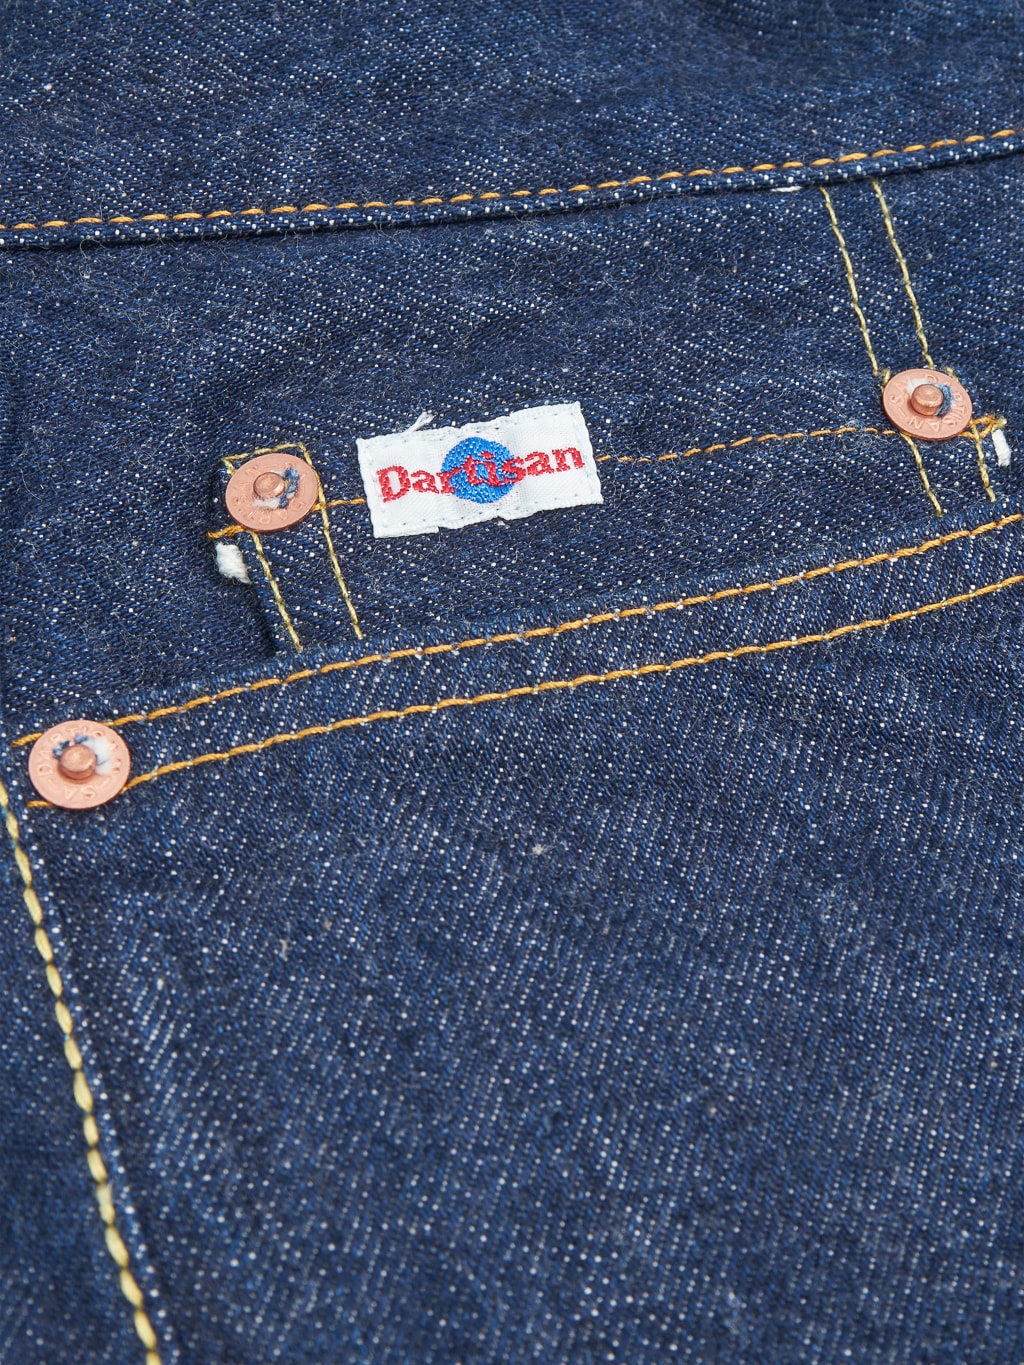 Studio D'Artisan natural indigo jeans pocket rivets